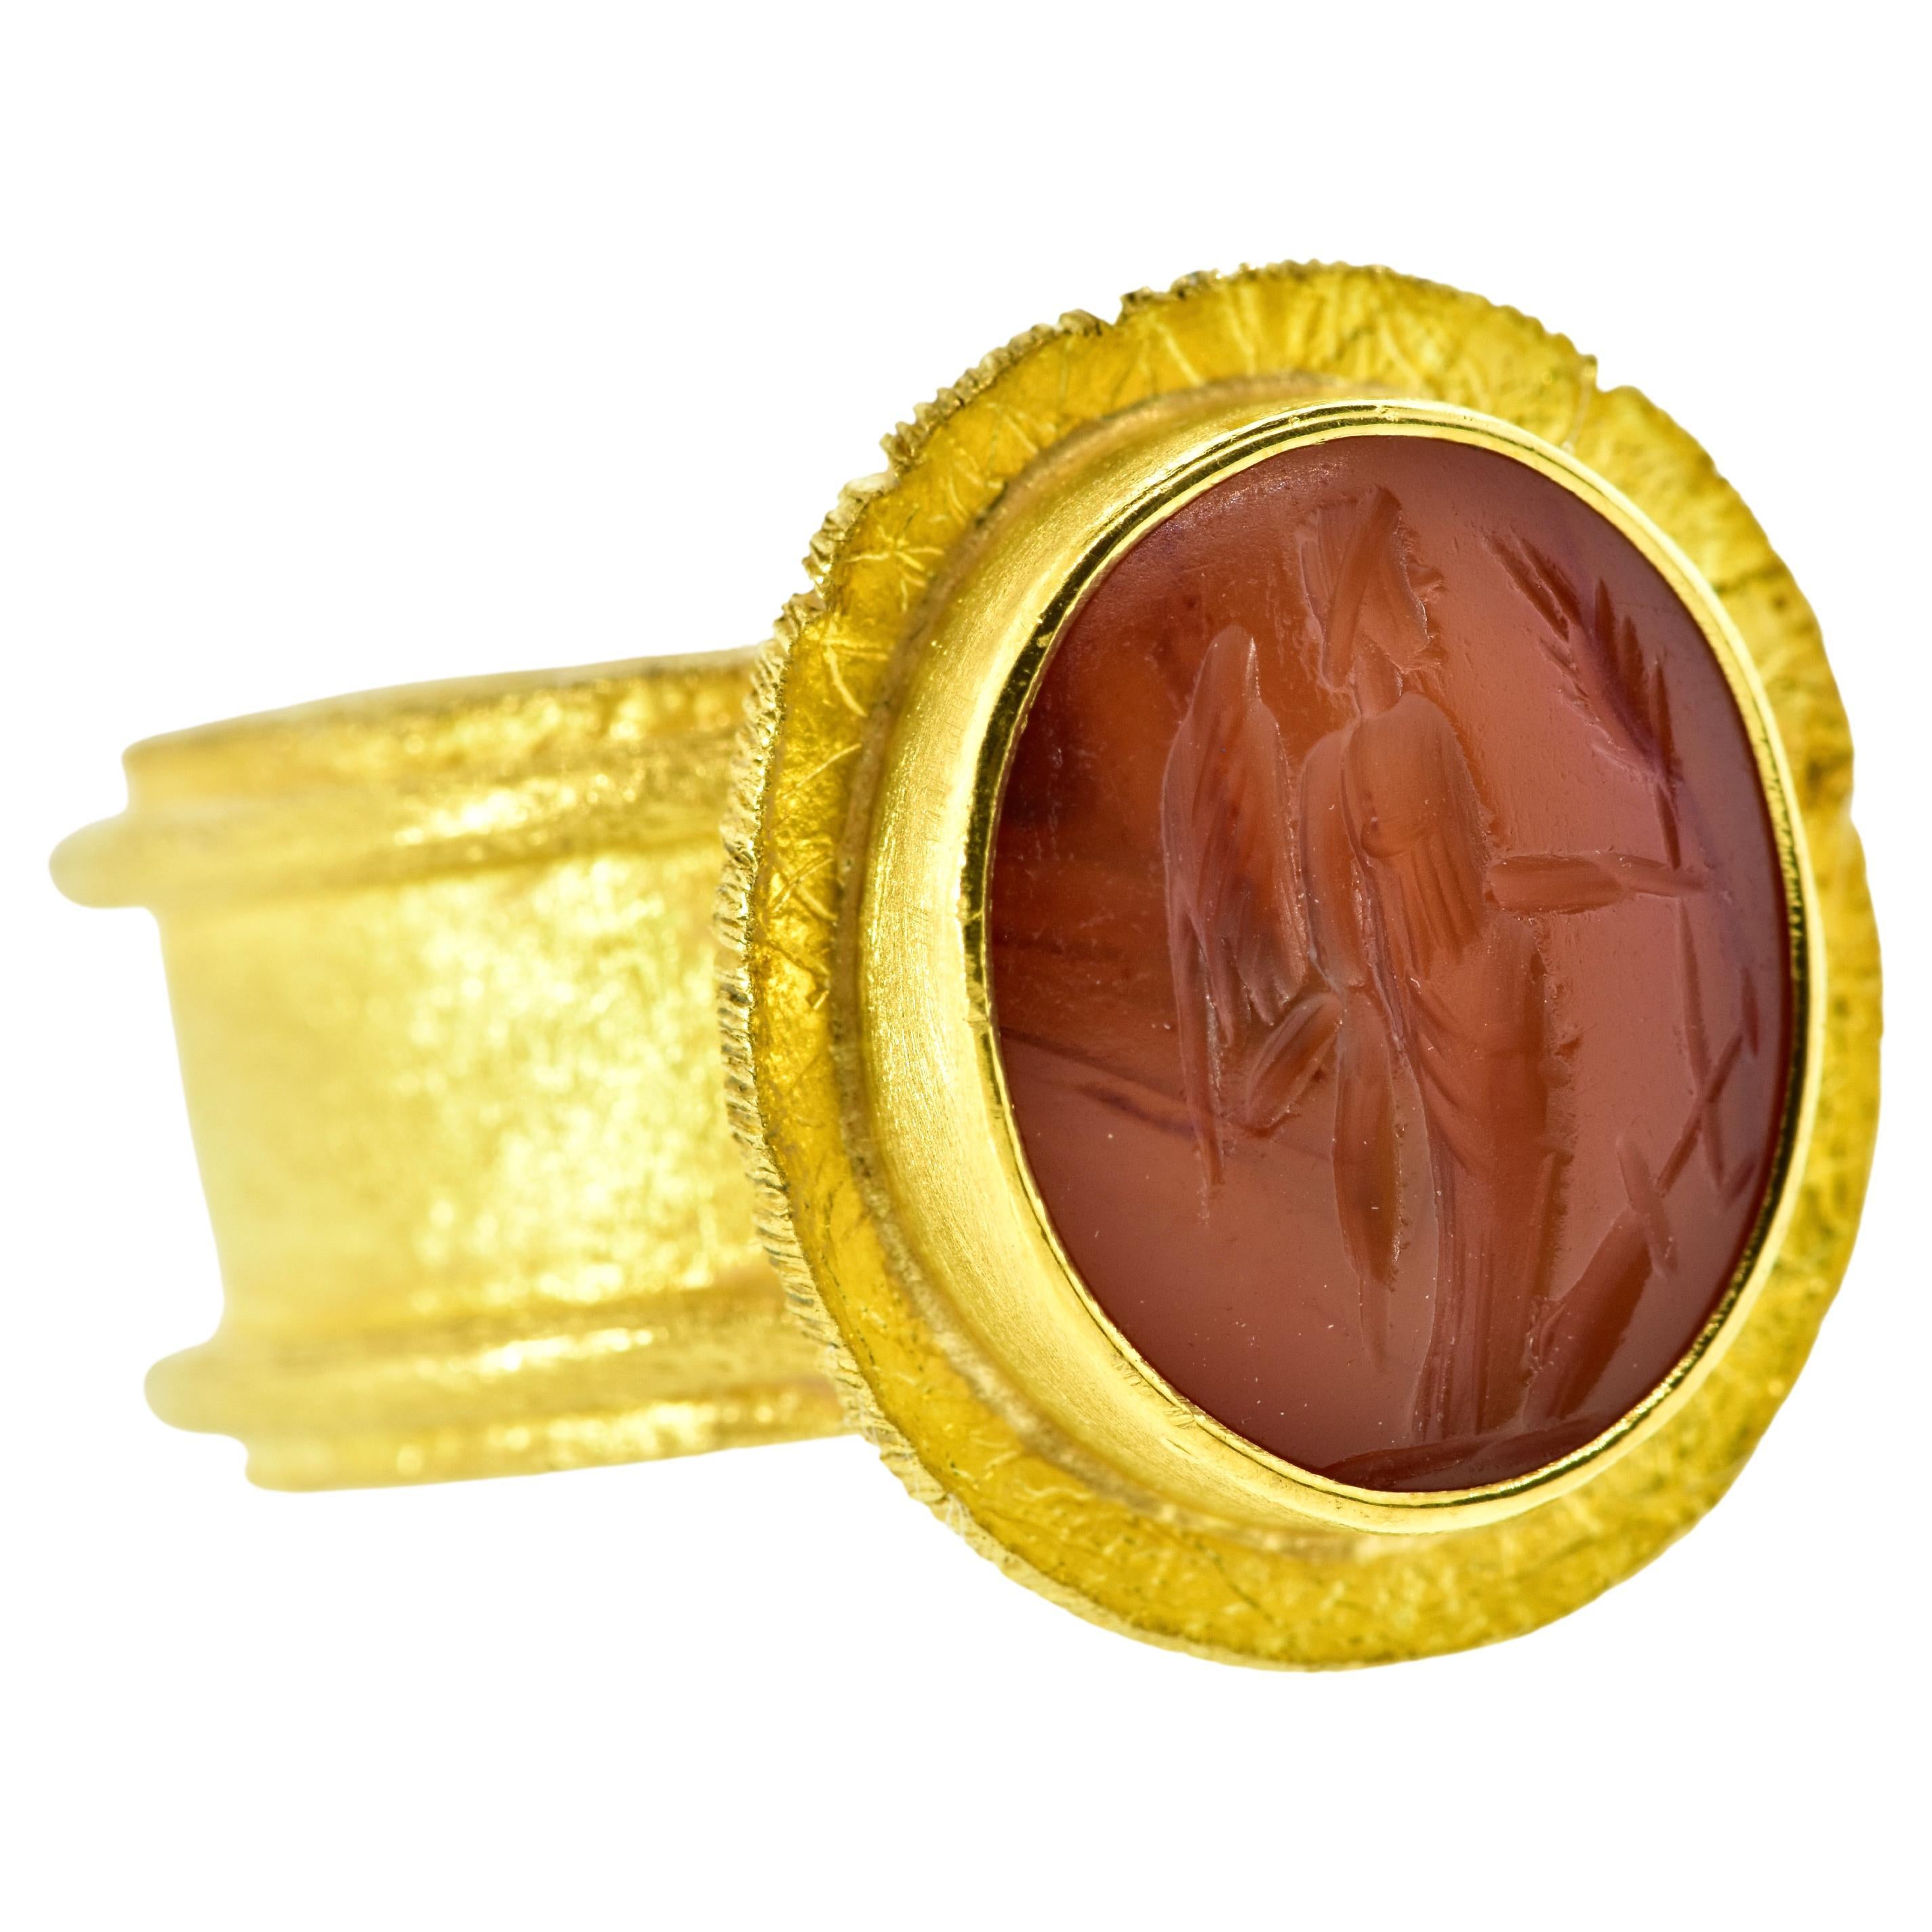 22K Yellow Gold Ring Centering an Antique Intaglio, Fairchild & Co.